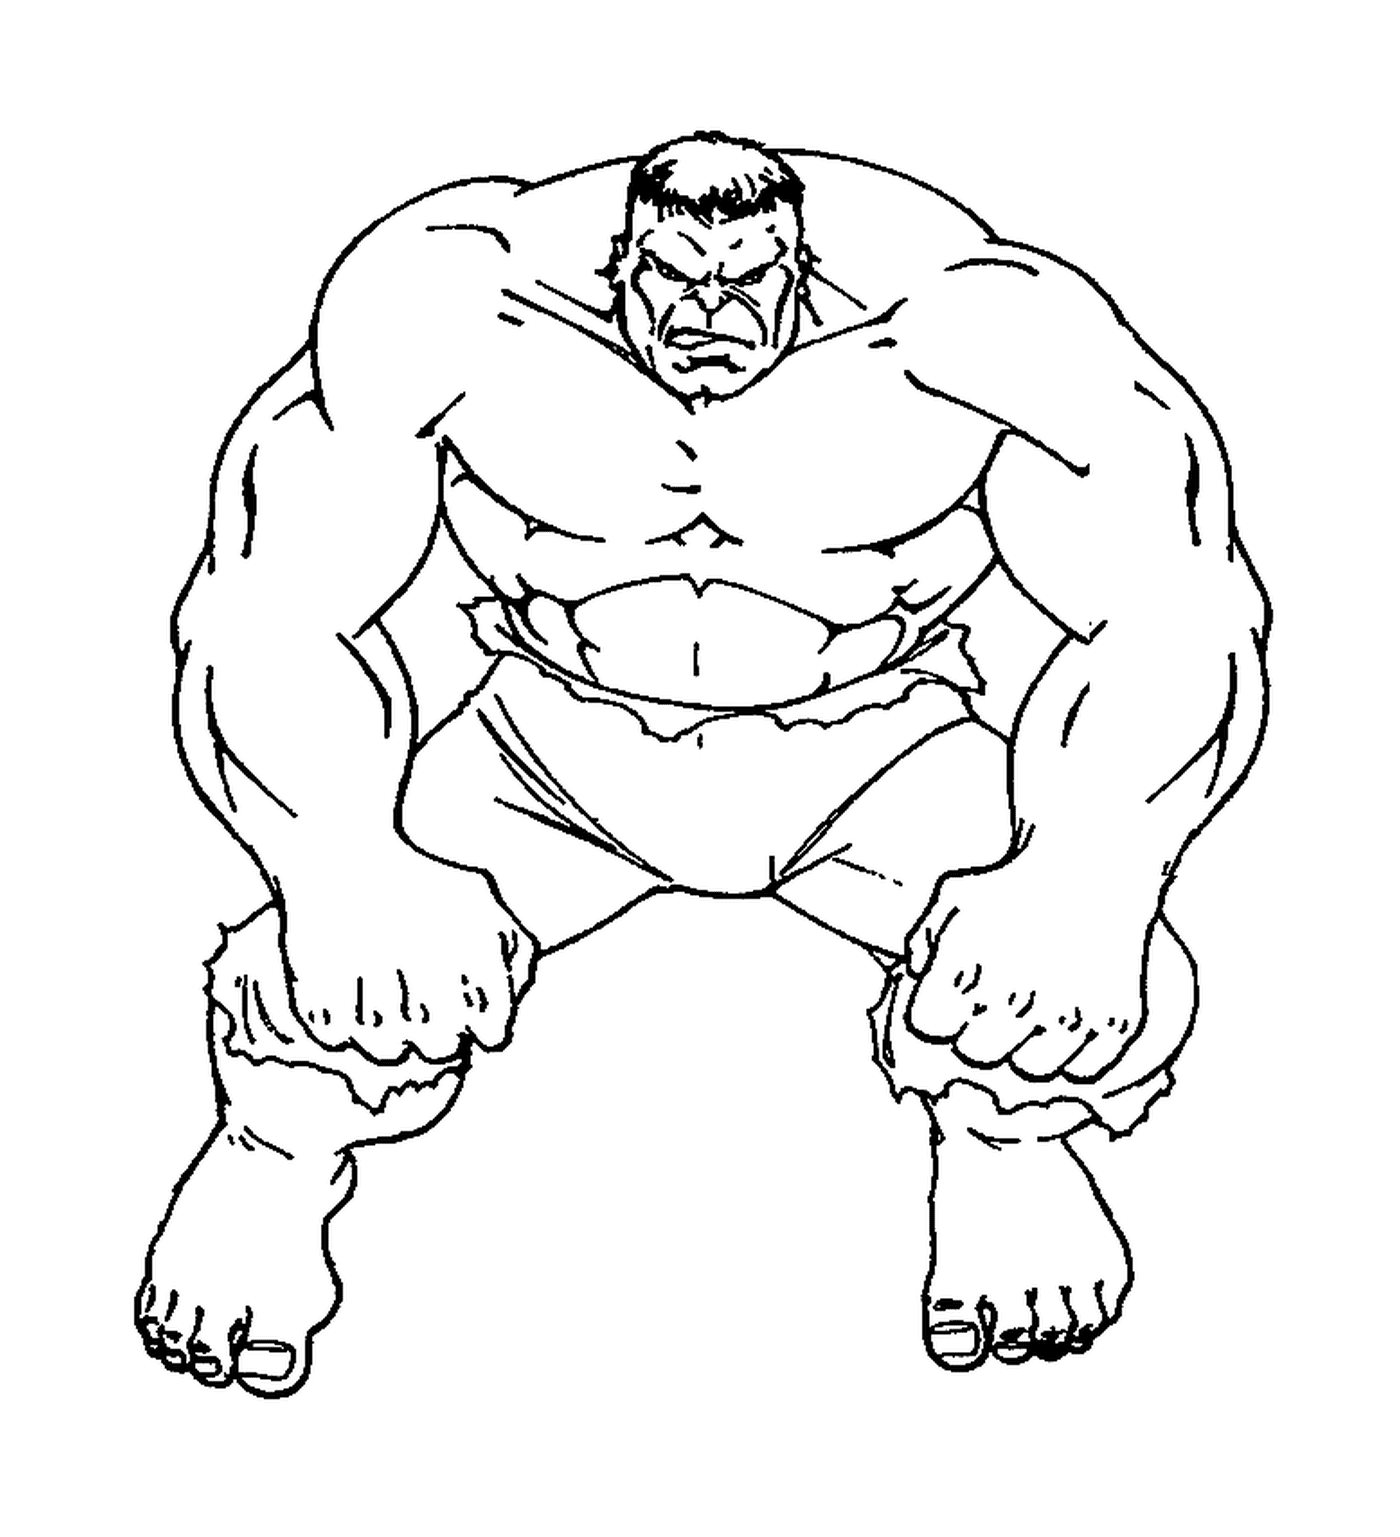   Hulk musclé dans un dessin 